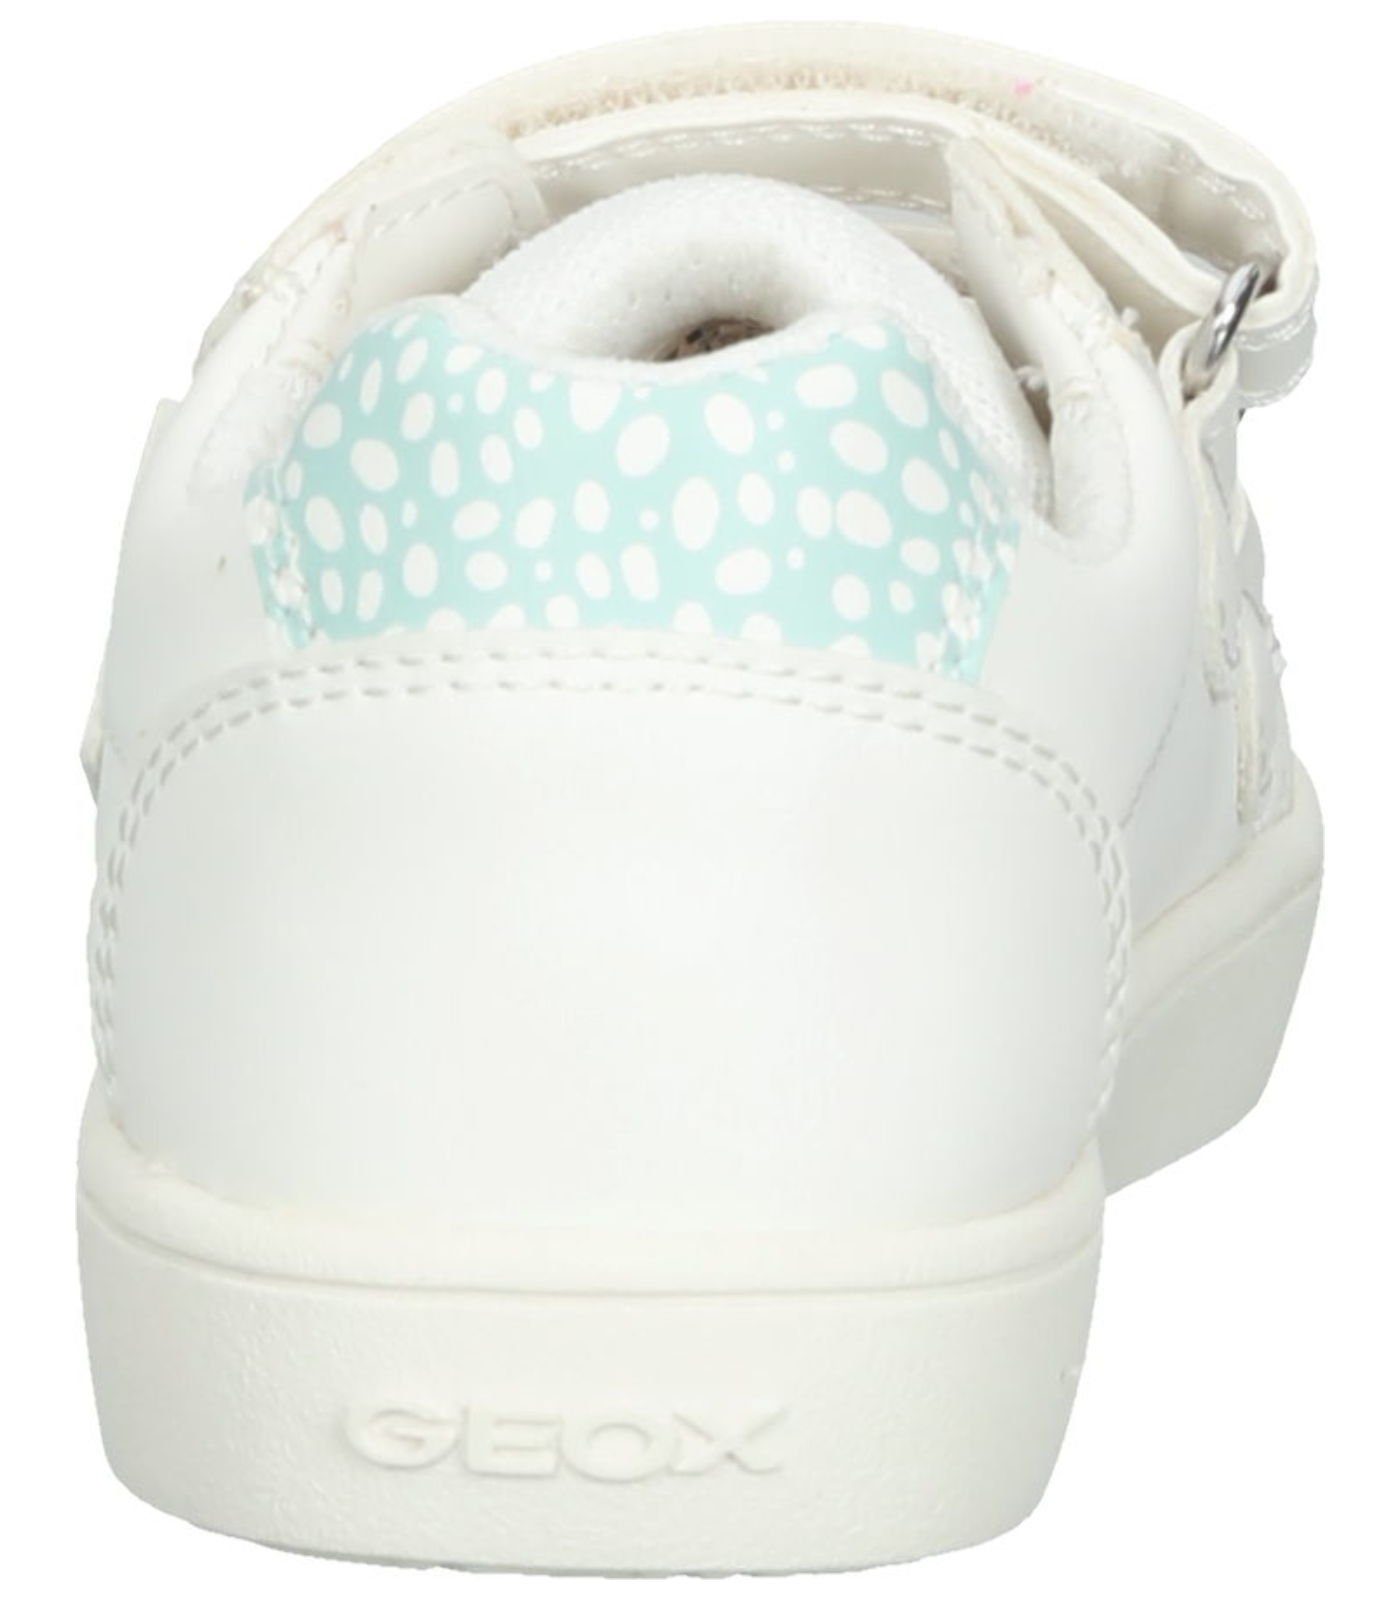 Sneaker Lederimitat/Textil Geox Sneaker